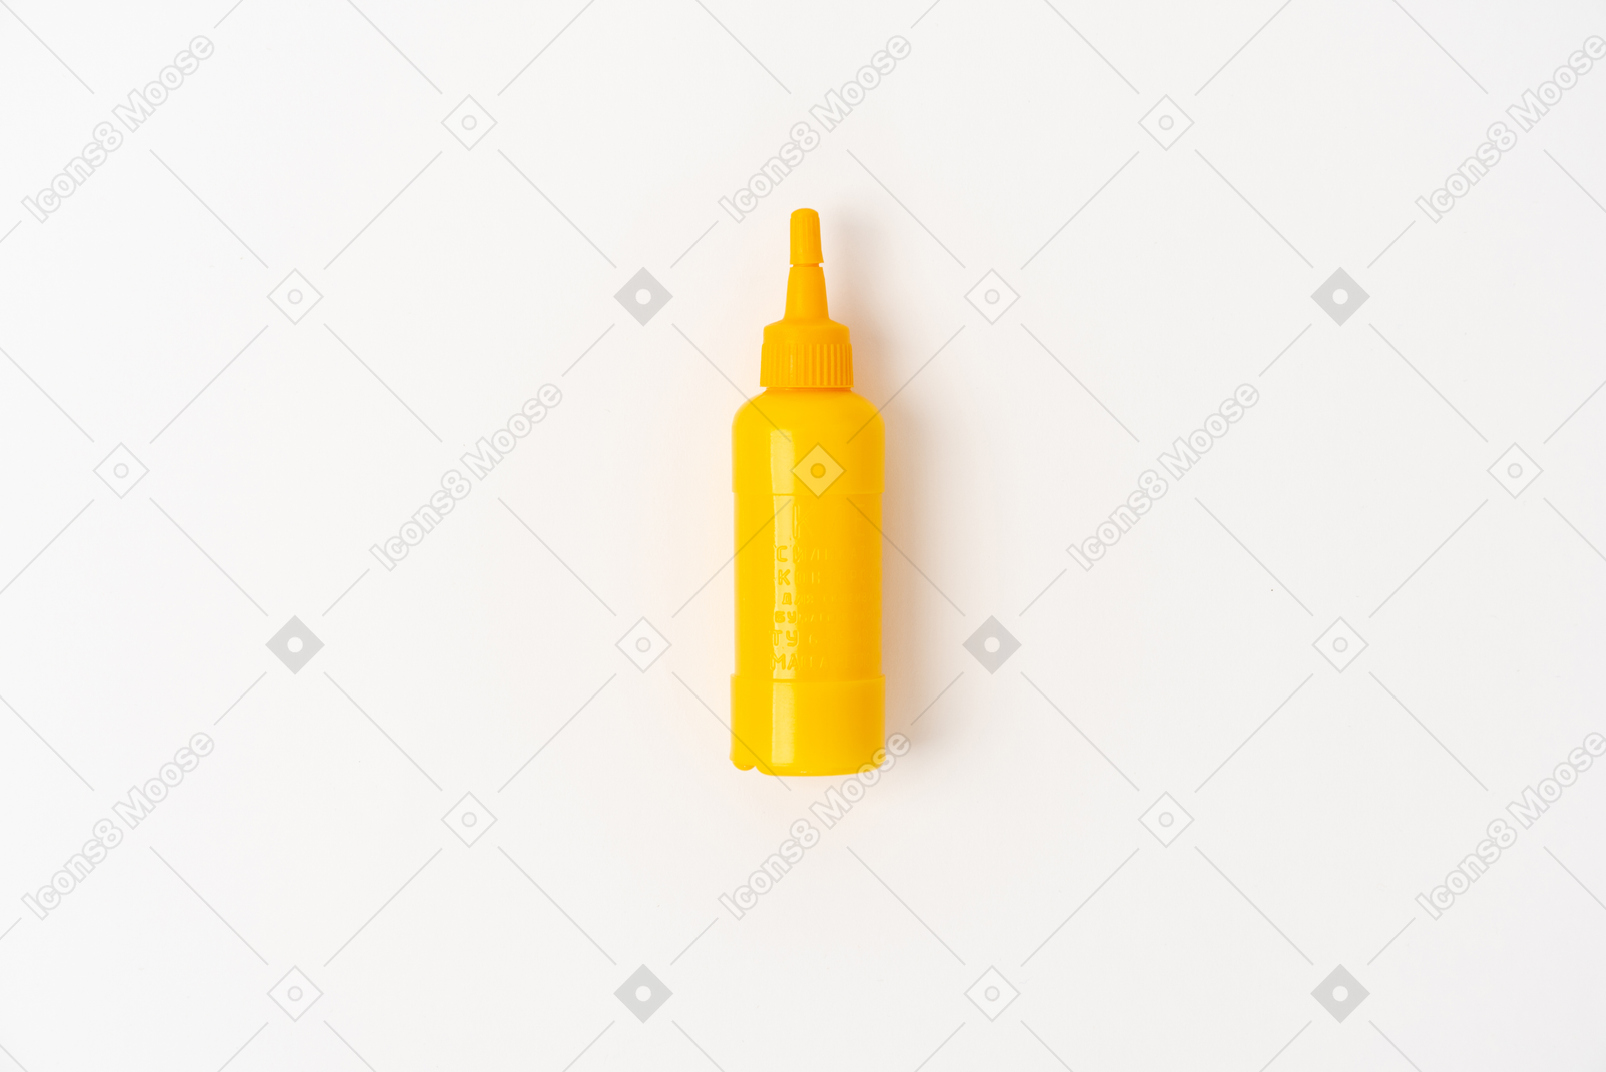 Plastic bottle on white background